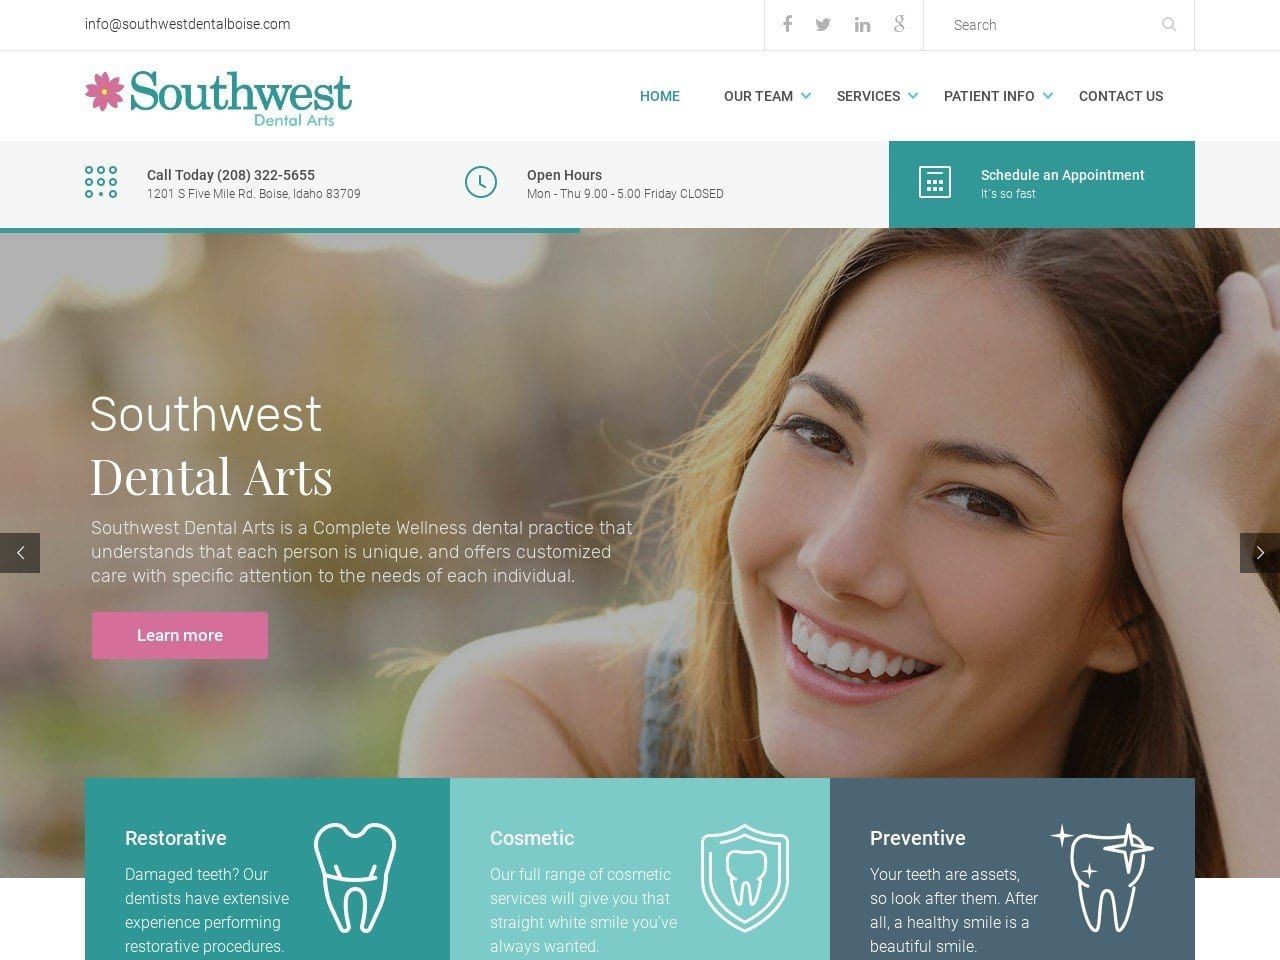 Southwest Dental Associates Website Screenshot from southwestdentalboise.com